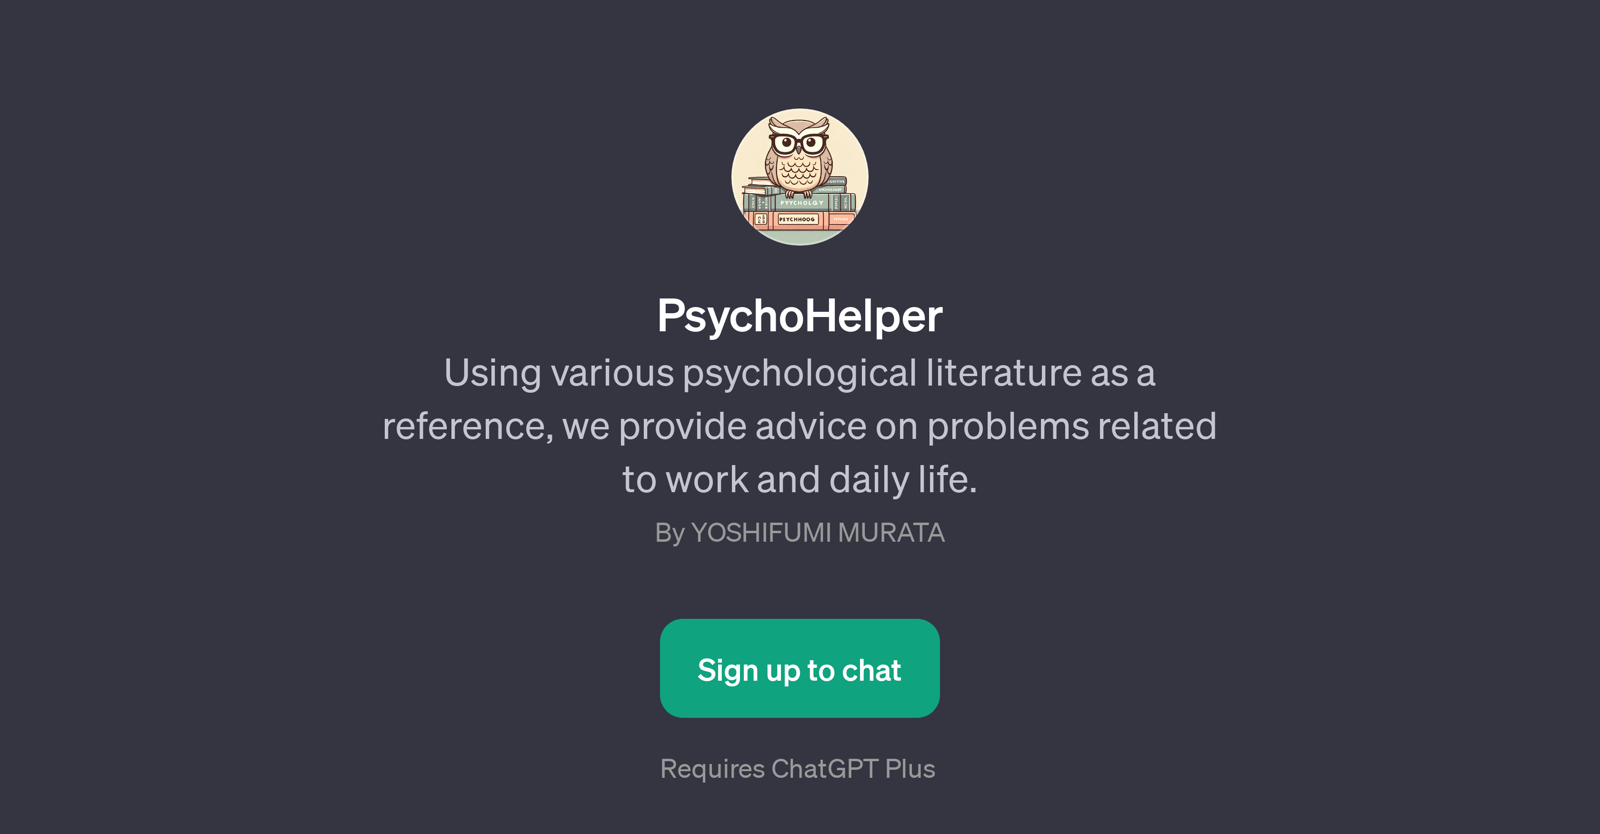 PsychoHelper website